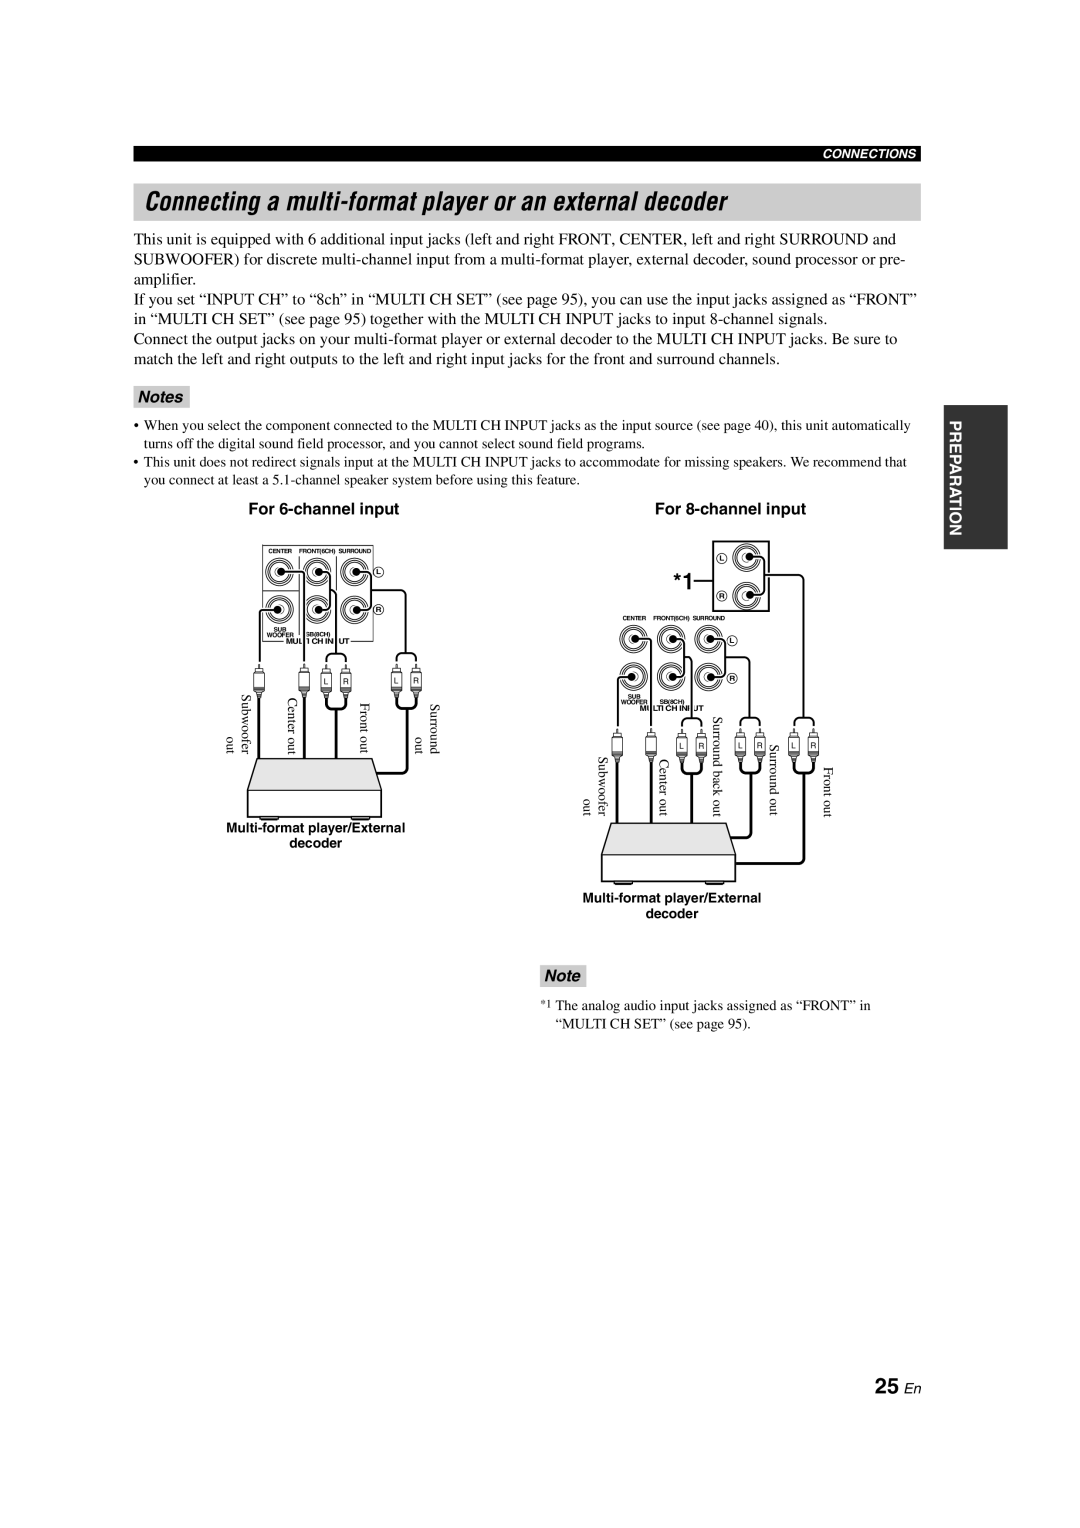 Yamaha HTR-6090 owner manual 25 En, Notes, For 6-channelinput, For 8-channelinput 